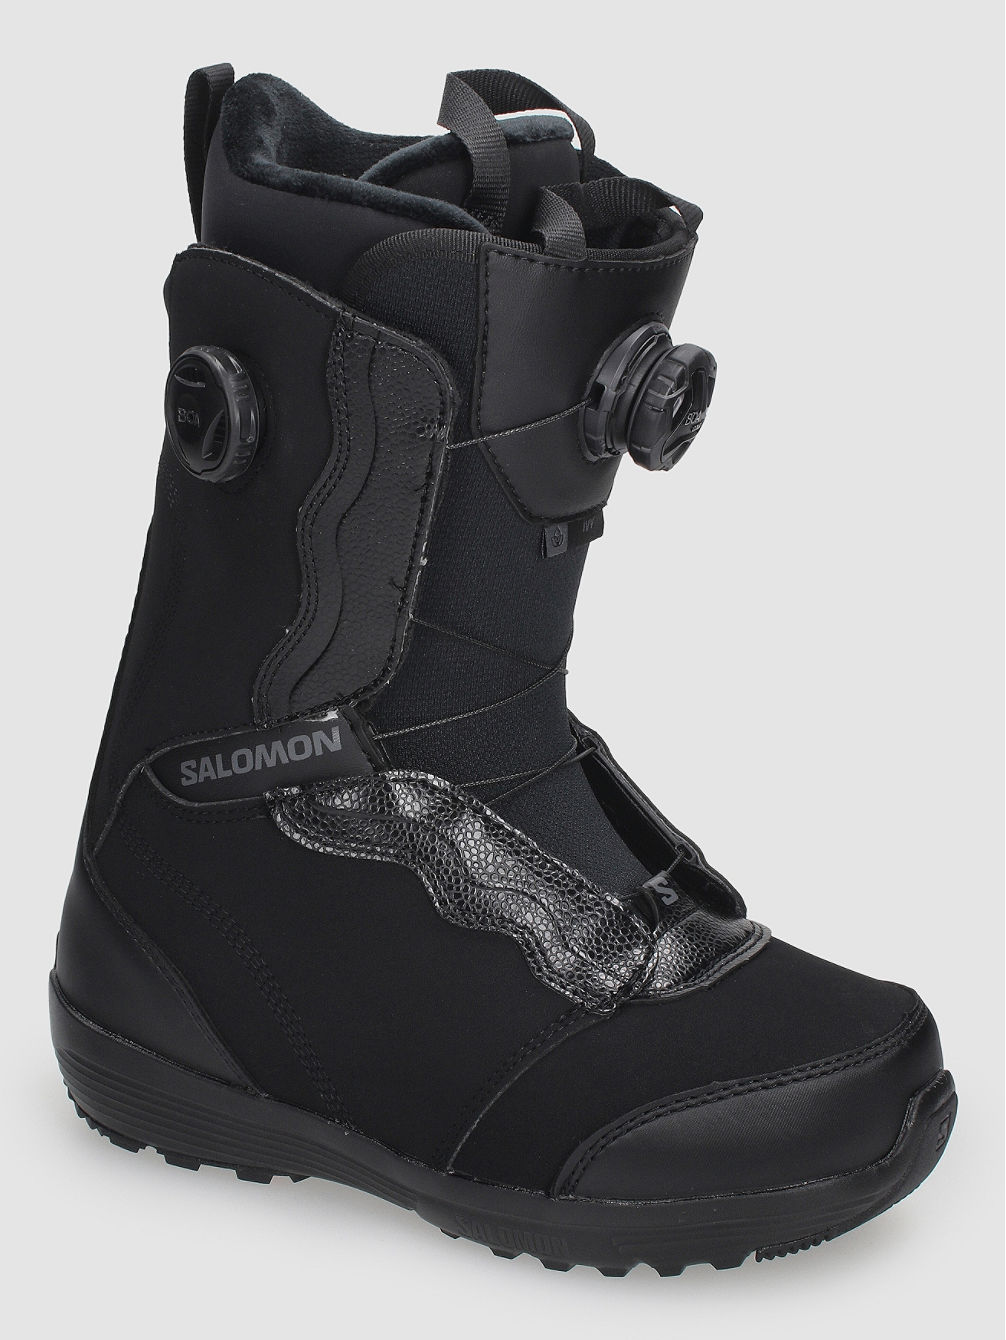 Ivy BOA SJ 2024 Snowboard Boots